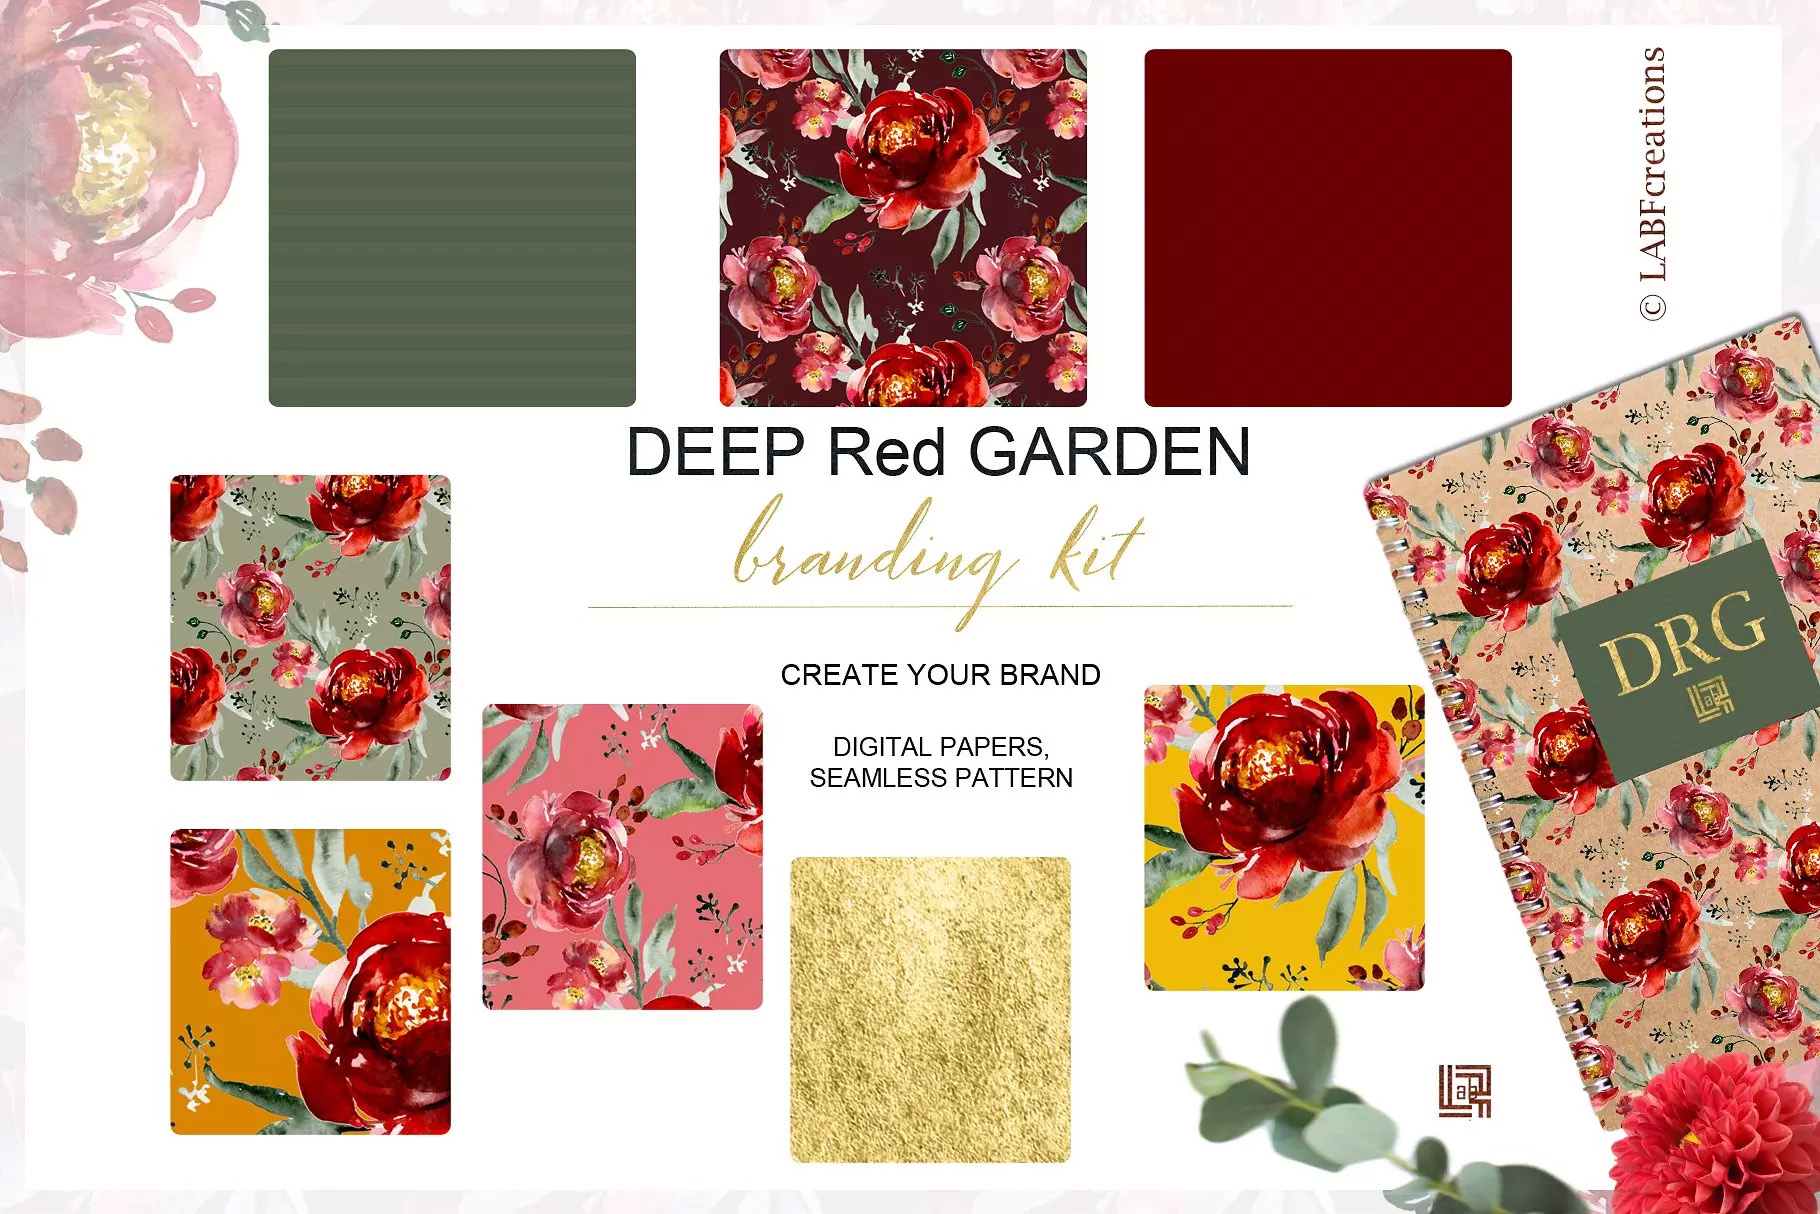 深红色水彩花卉 Deep red garden. Brand